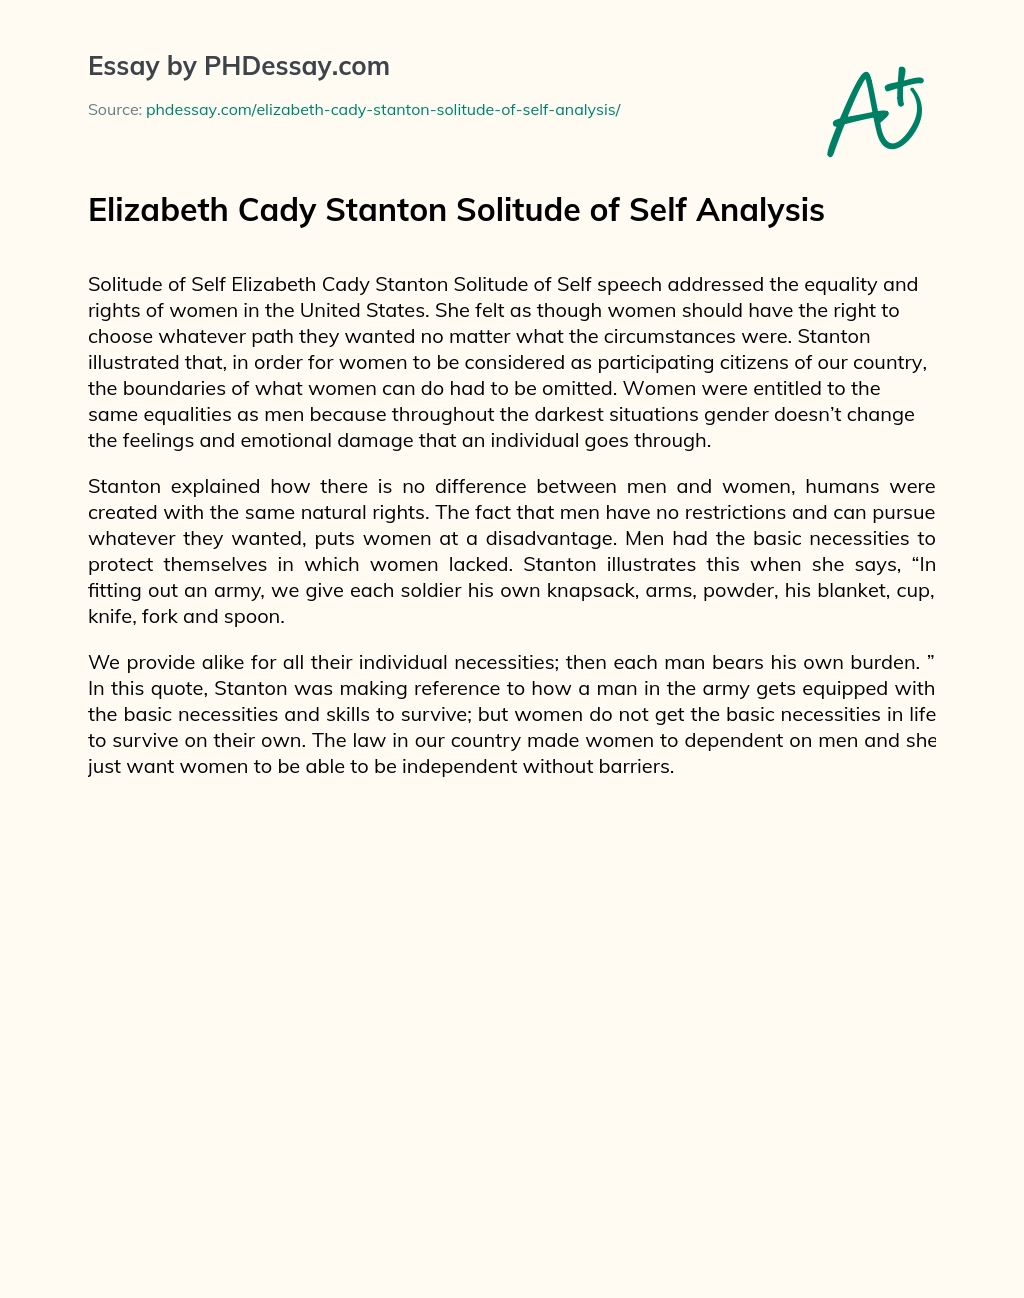 Elizabeth Cady Stanton Solitude of Self Analysis essay